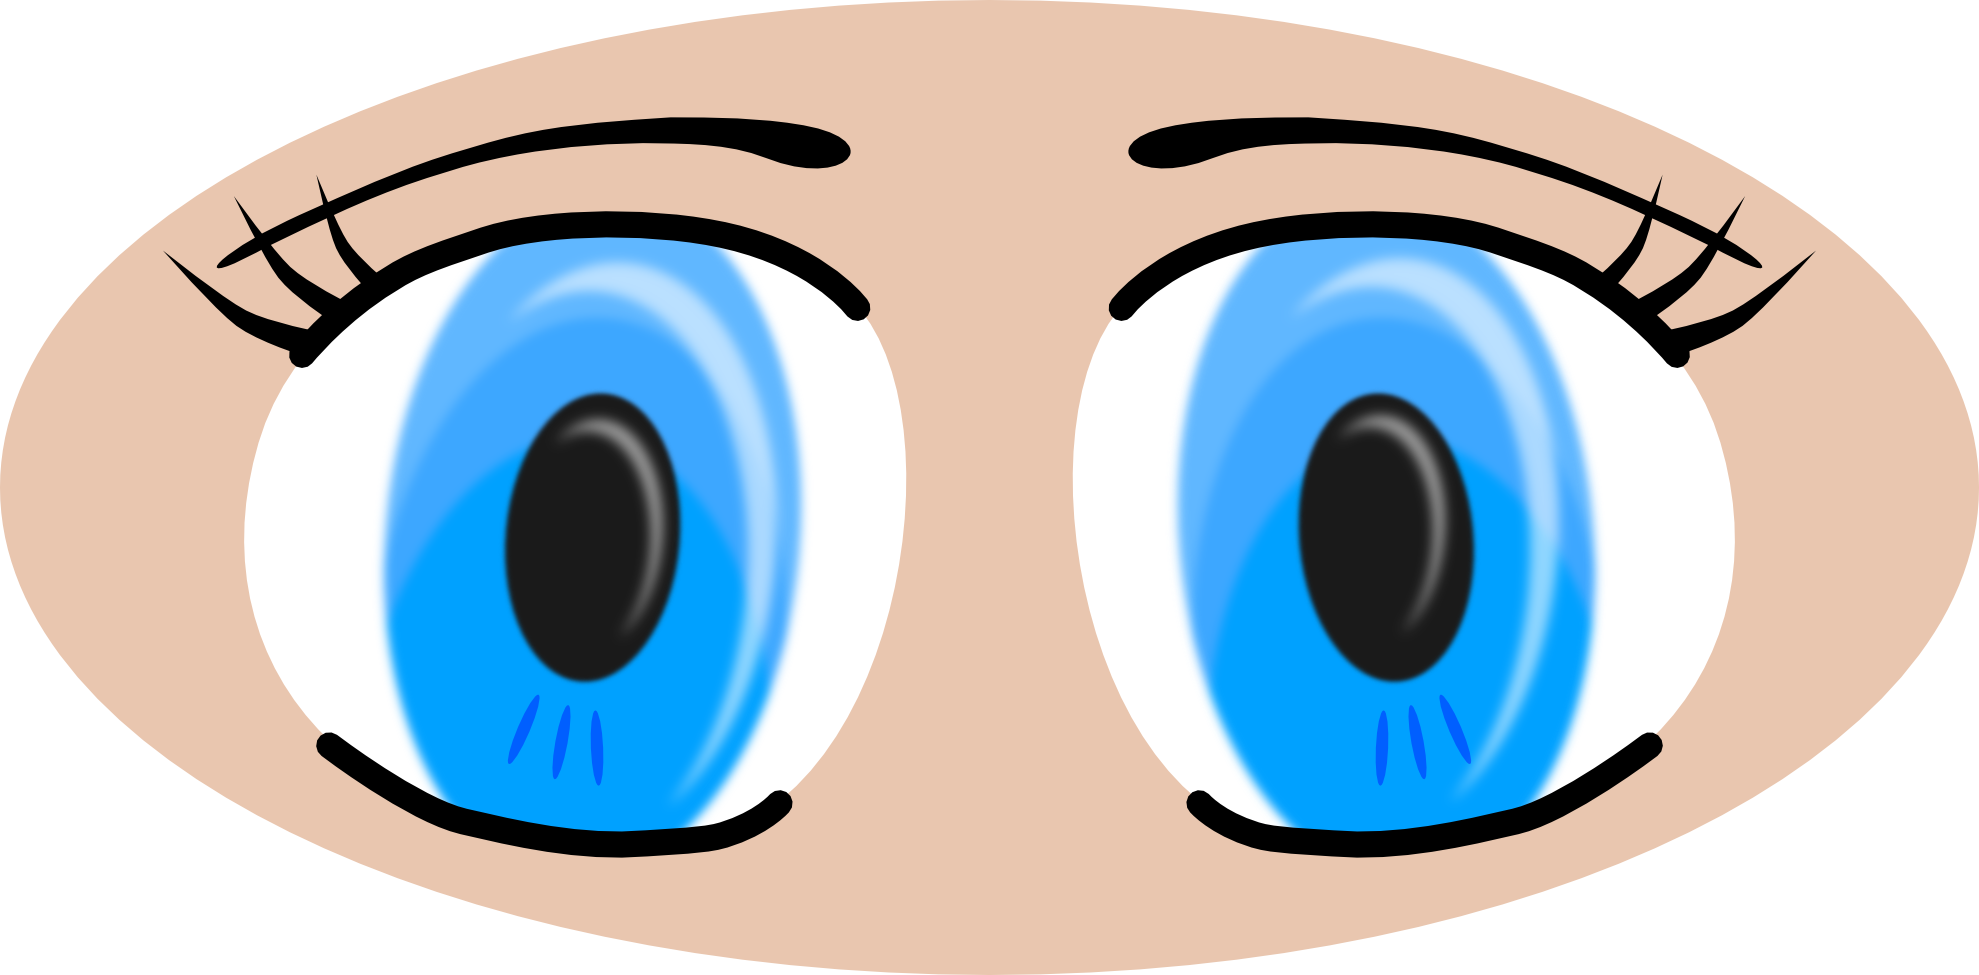 Eyeball eyes cartoon eye clip art clipart image 0 2 2 - Clipartix